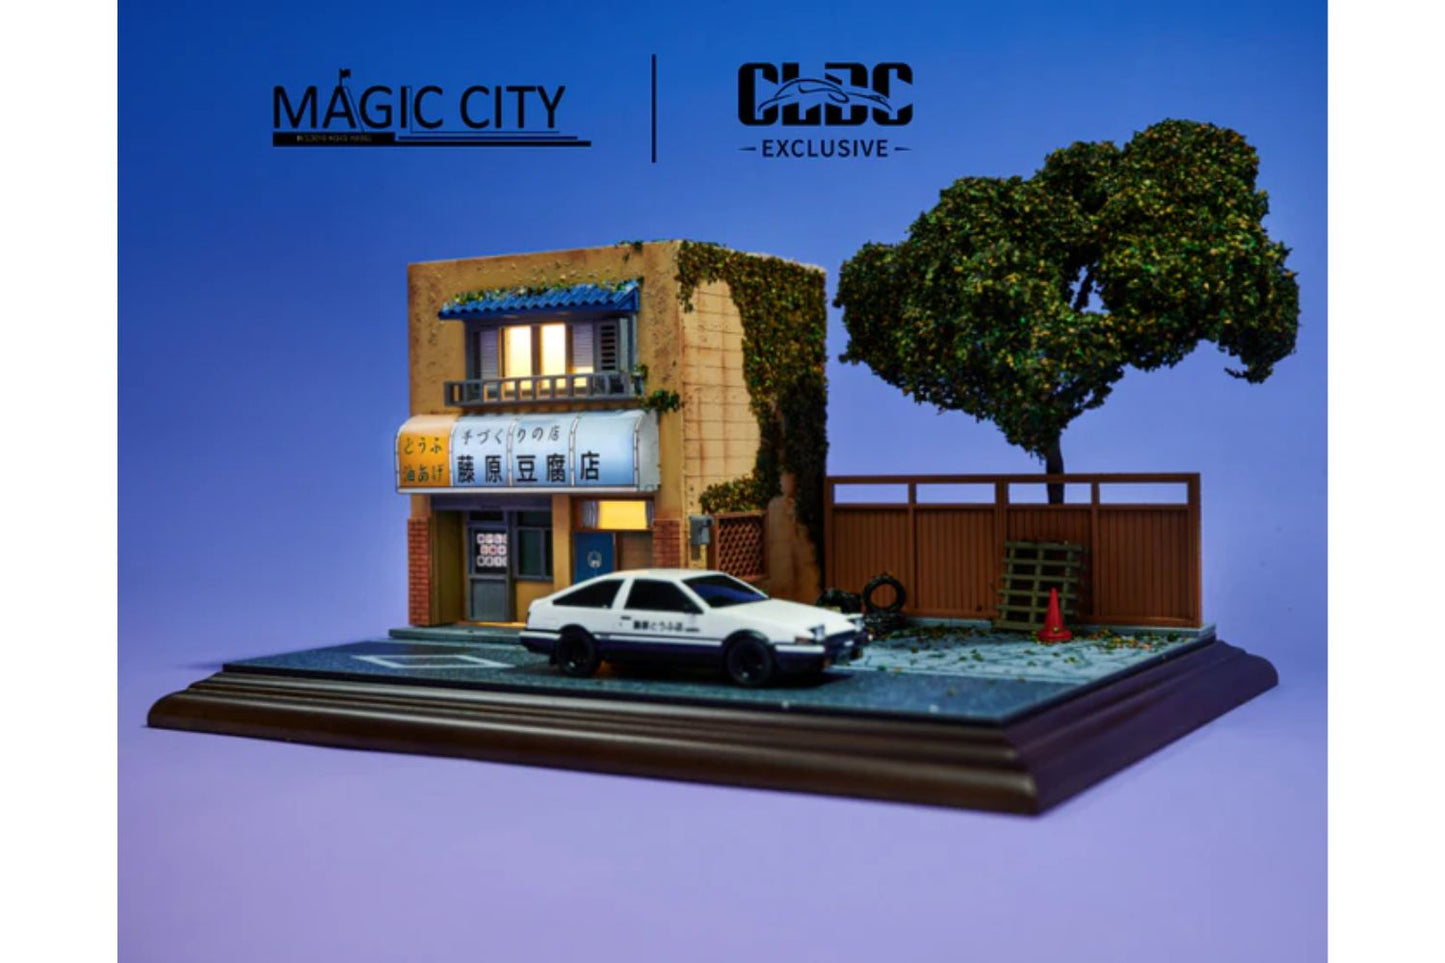 Magic City x CLDC Exclusive 1/64 Scale Illuminated Fujiwara Tofu Shop